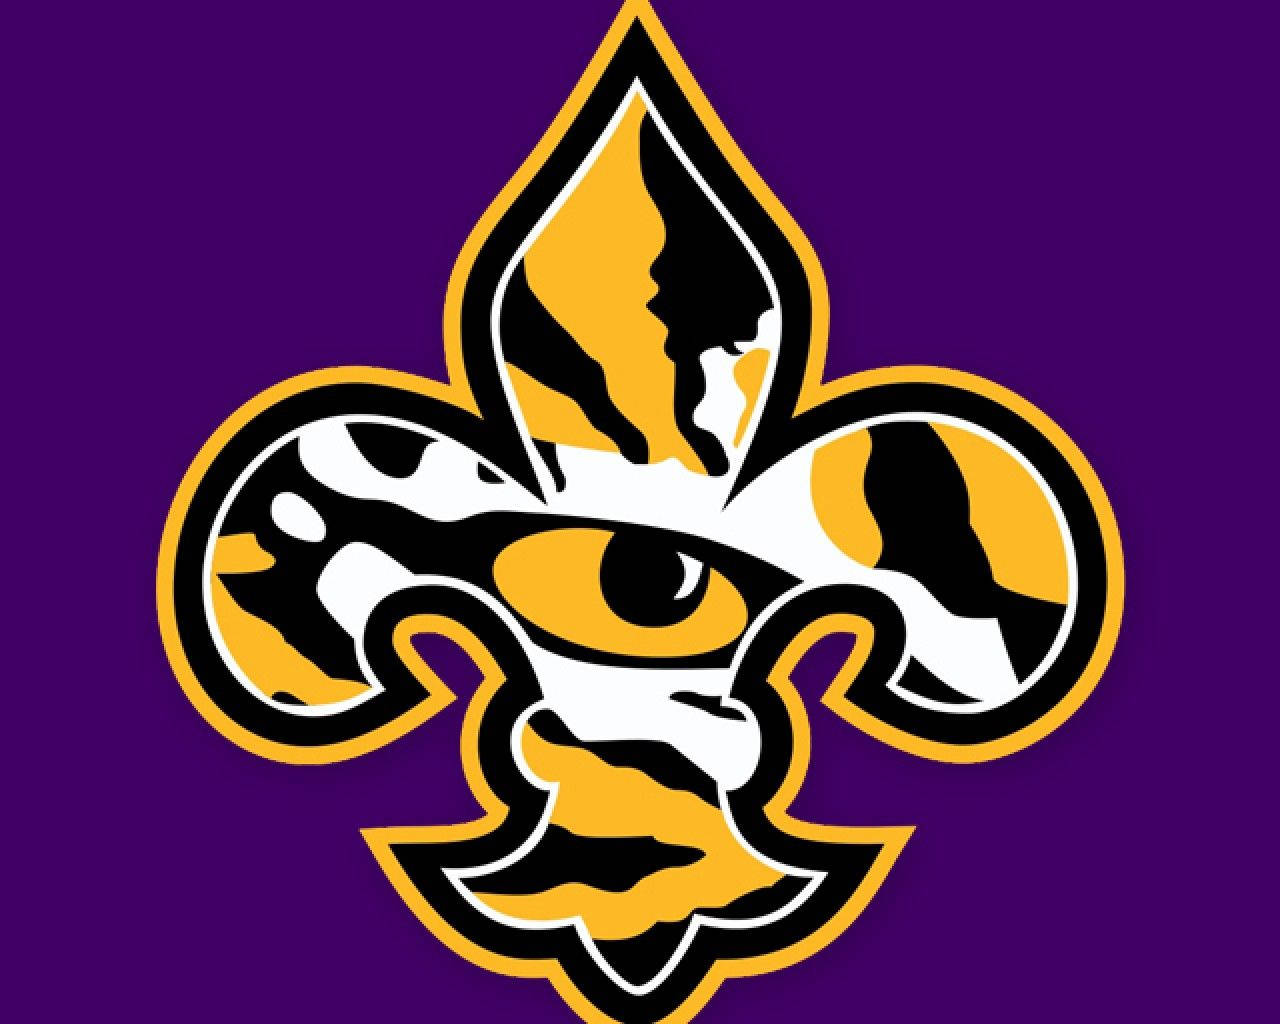 Download Lsu Tigers Logo On Purple Background Wallpaper